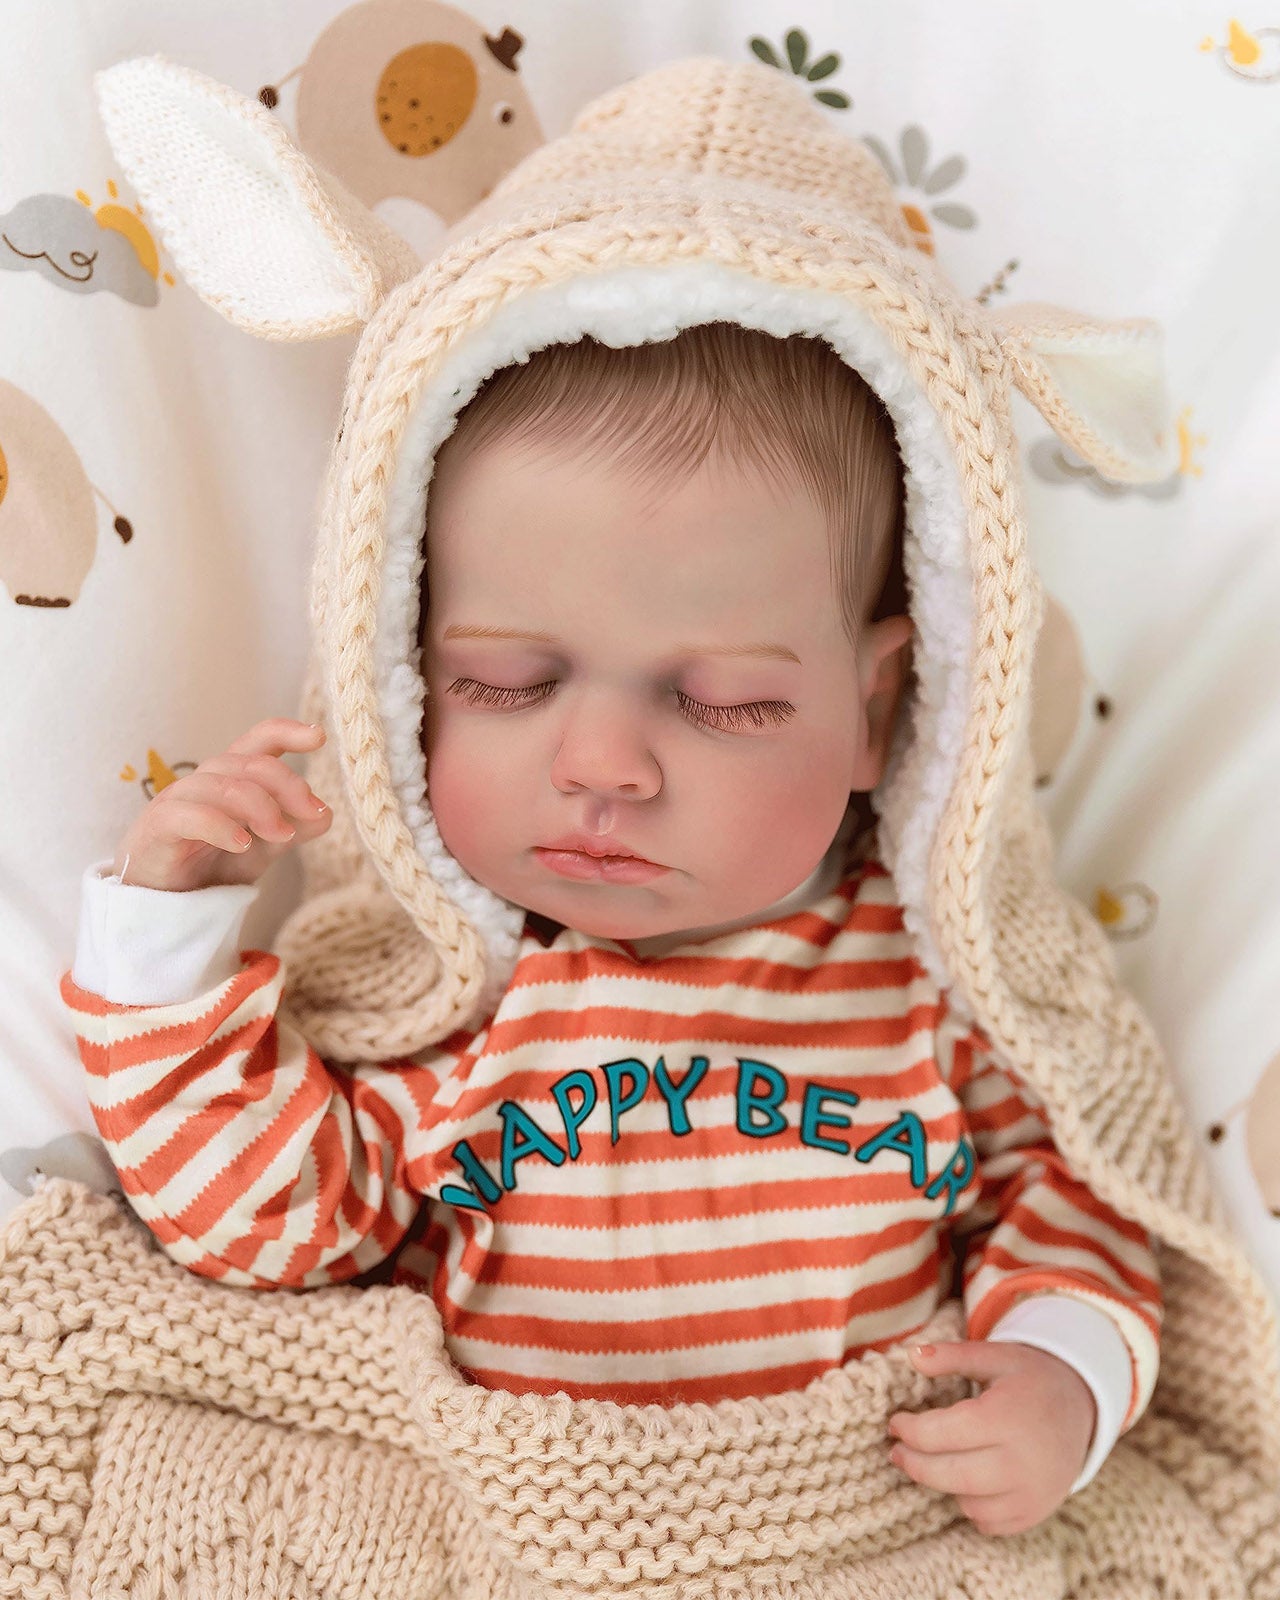 Hilary - 20" Reborn Baby Dolls Cute Sleeping Newborn Girl with Chubby Cheeks